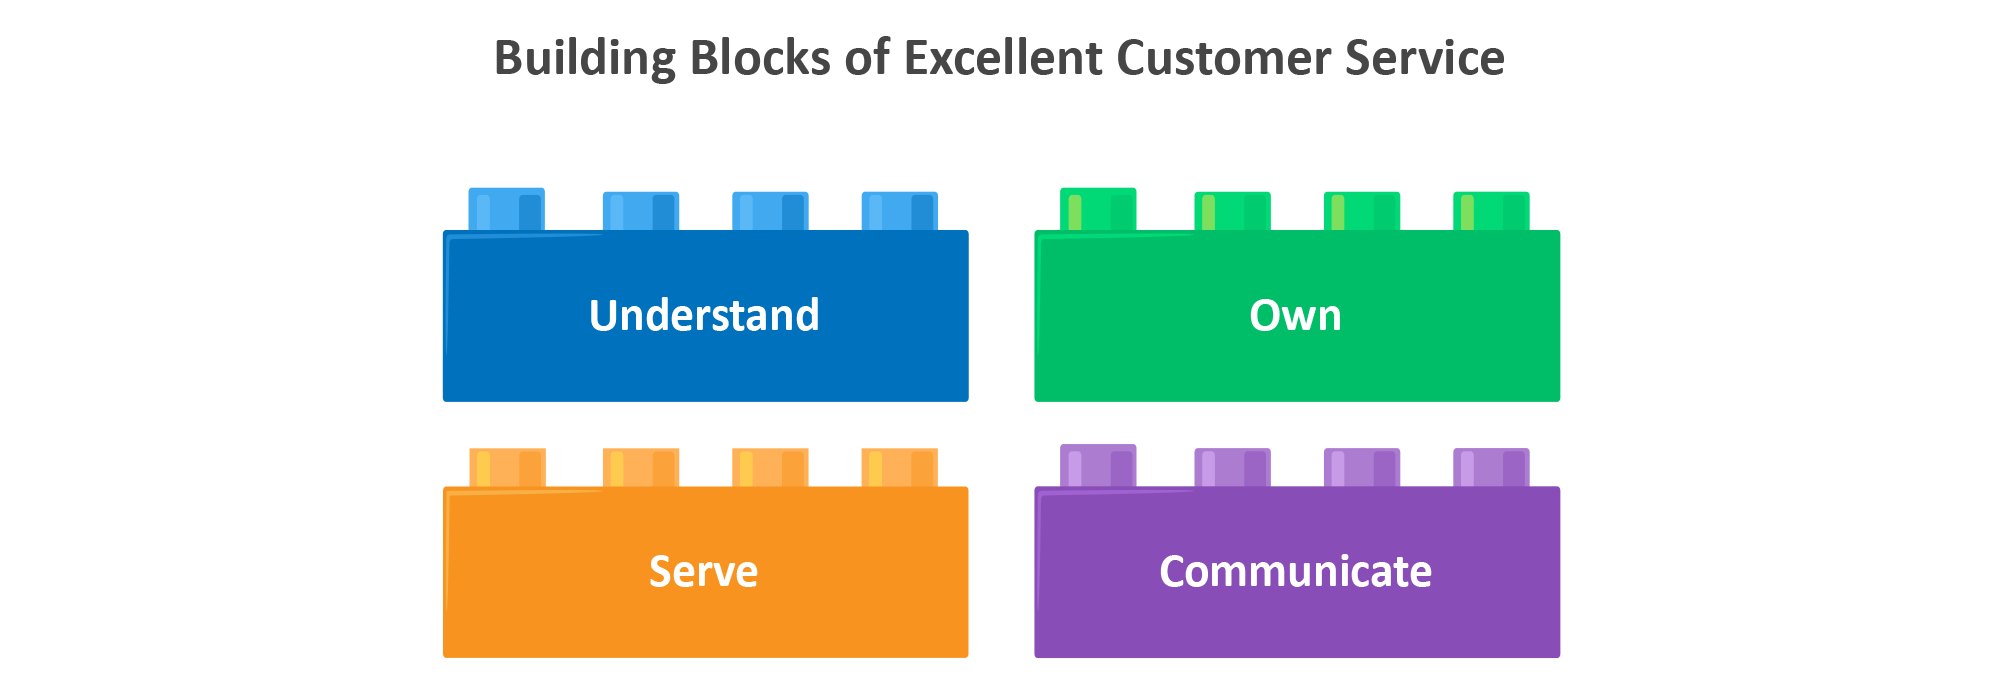 Building Blocks of Excellent Customer Service